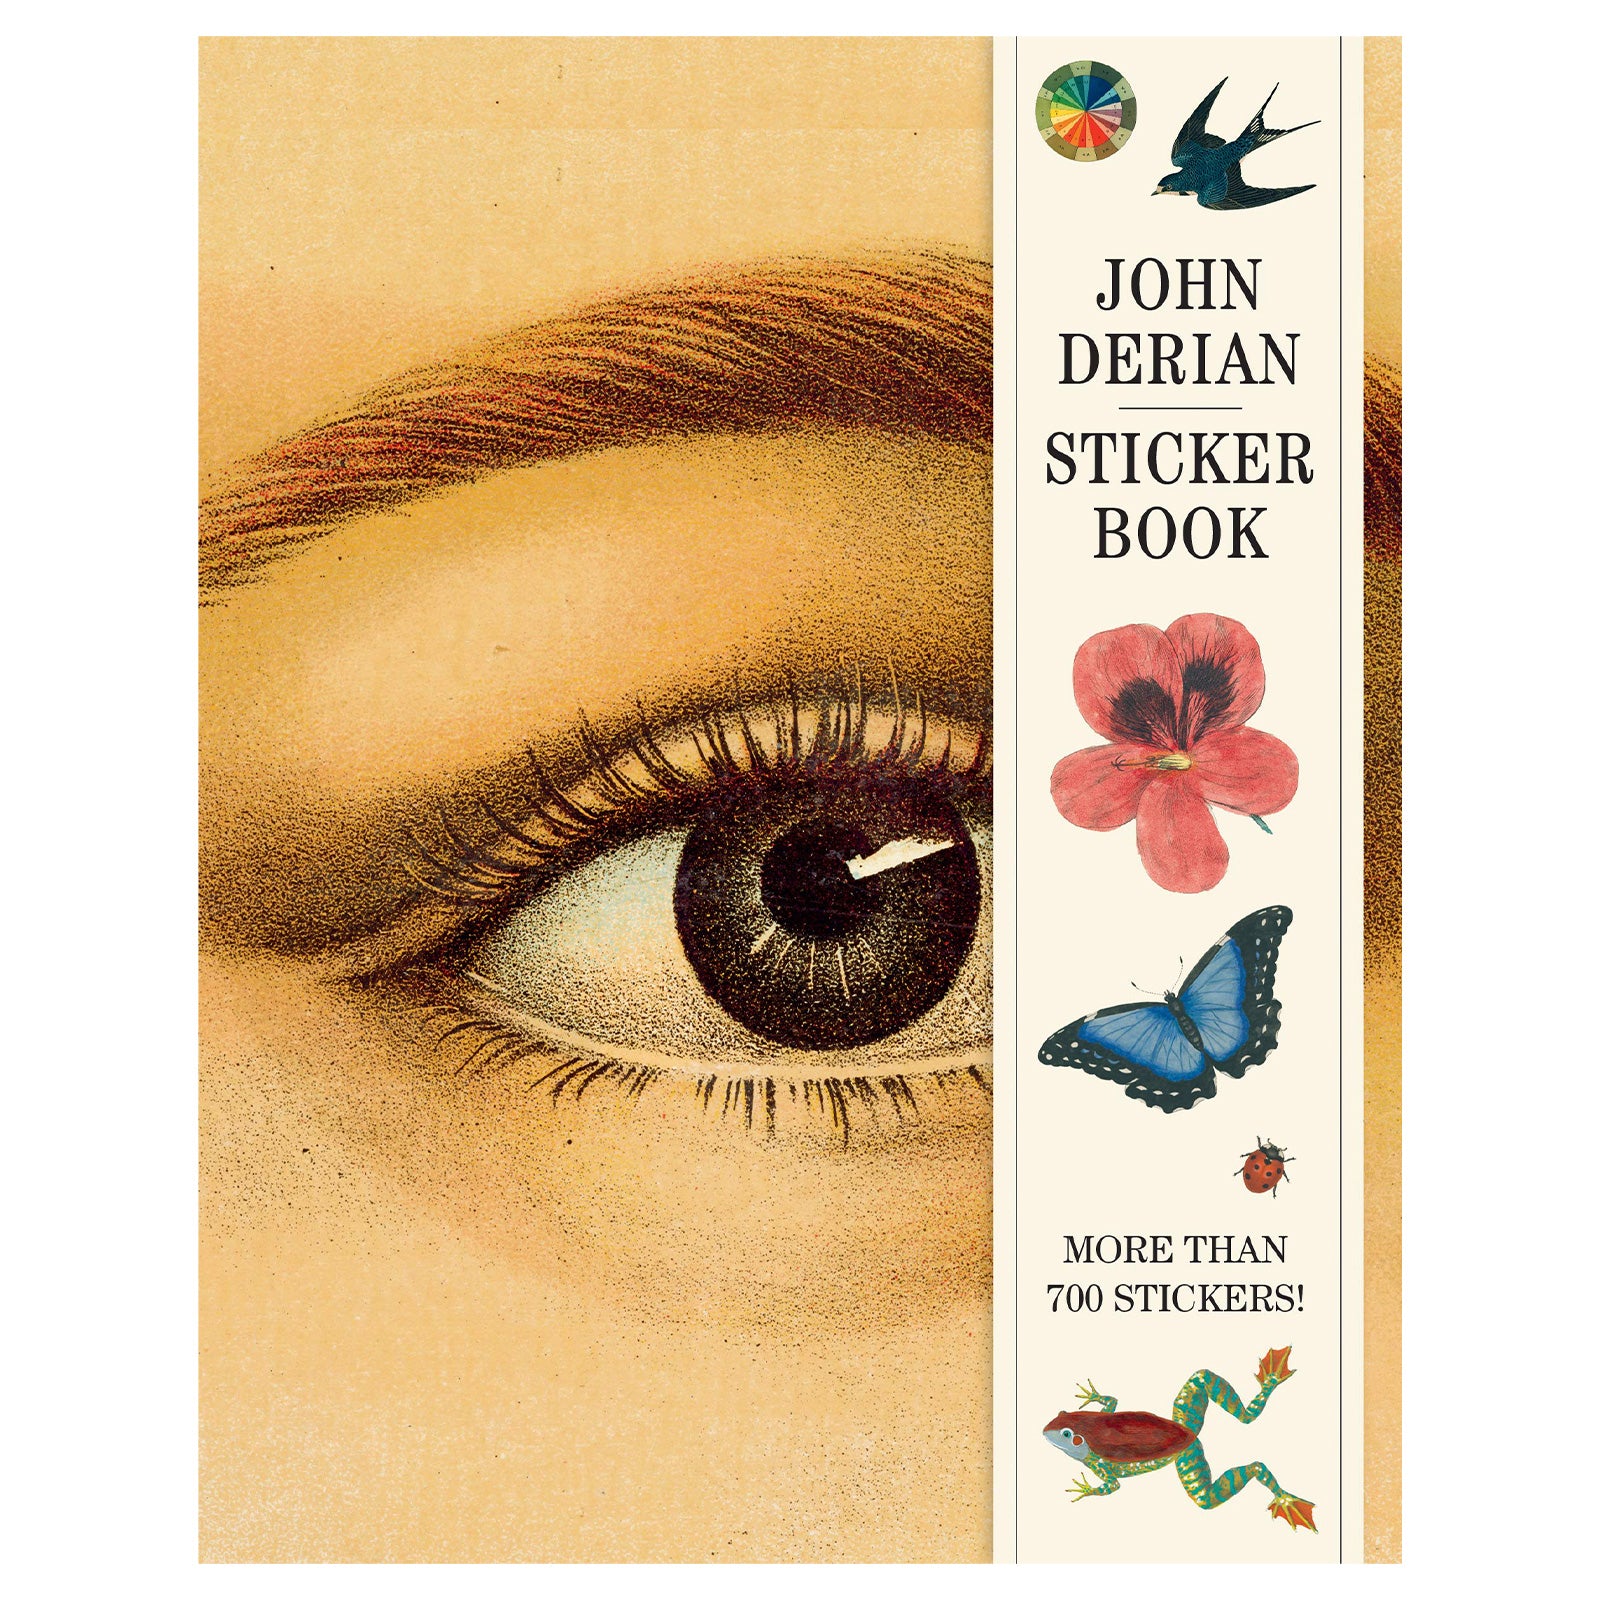 John Derian Sticker Book's front cover.